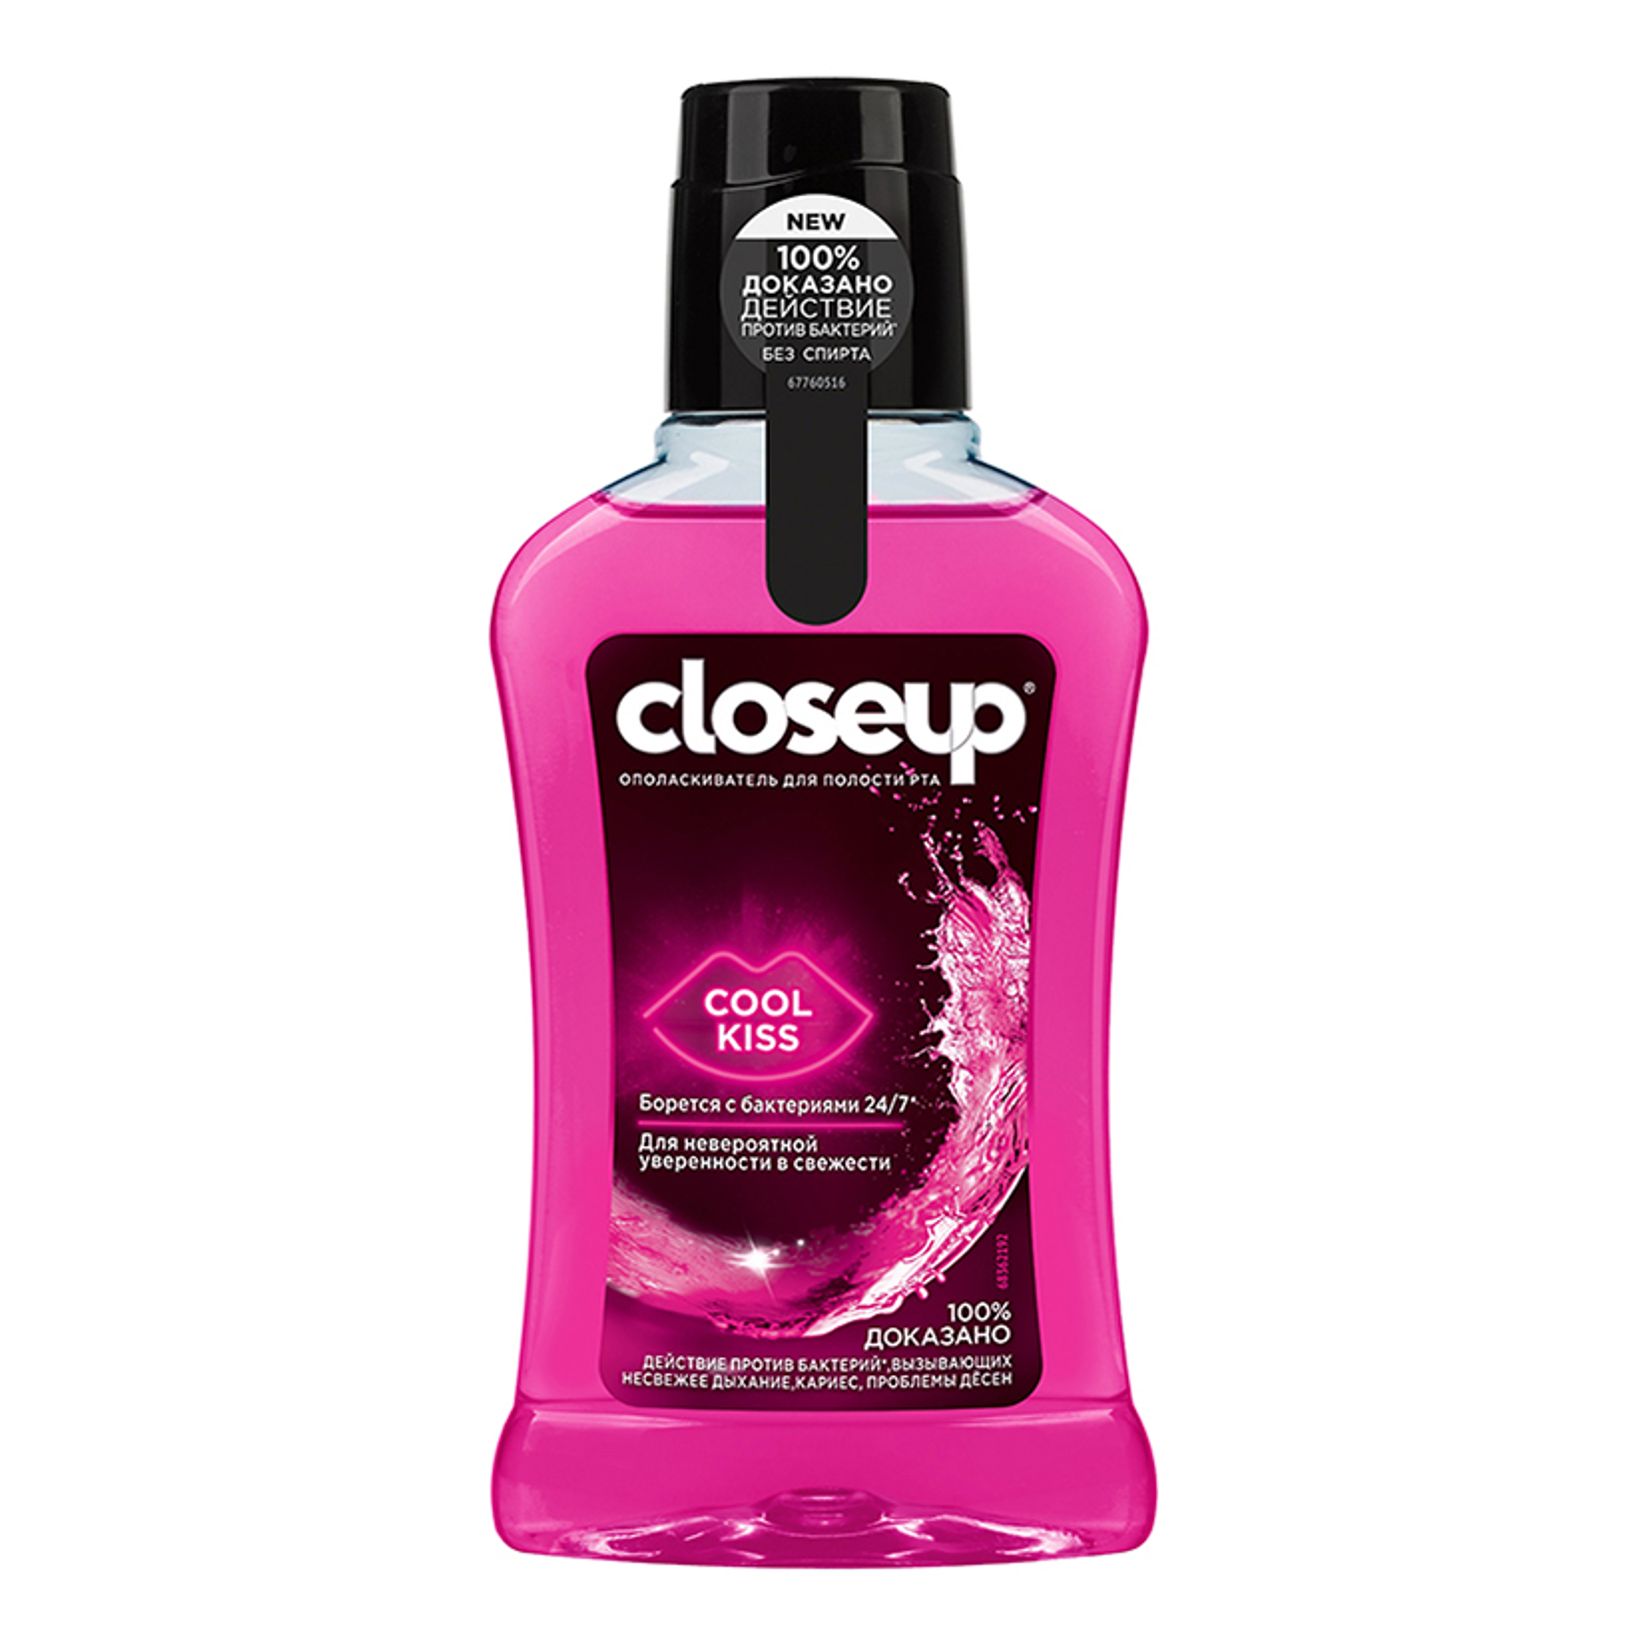 CloseUp Ополаскиватель для полости рта Cool kiss 250 мл